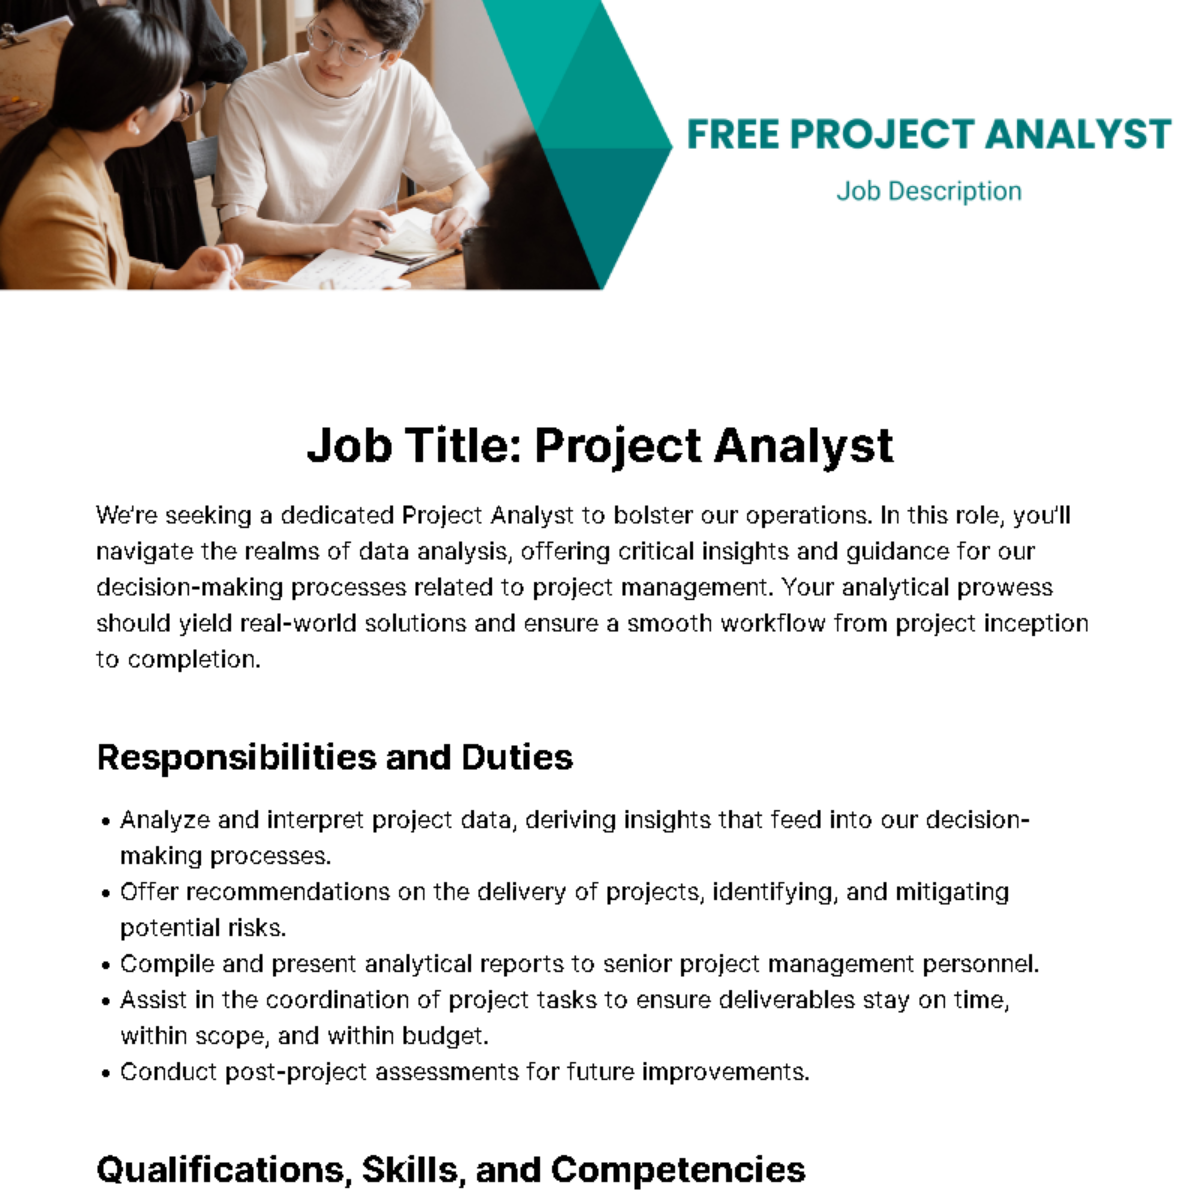 Free Project Analyst Job Description Template